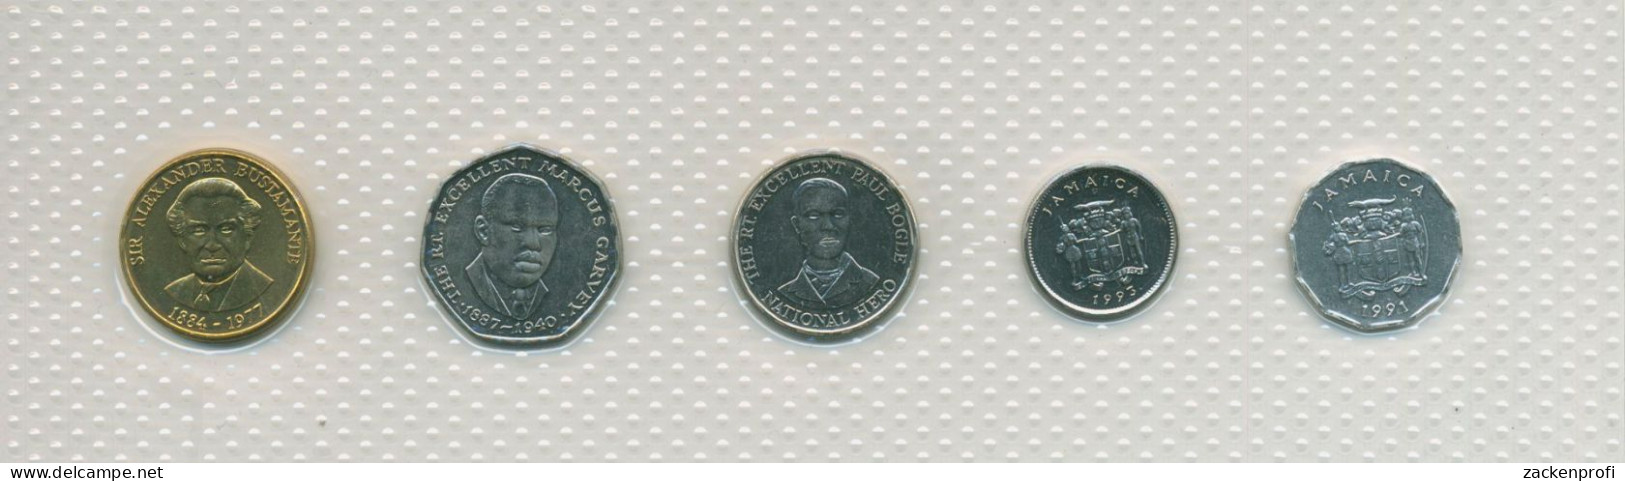 Jamaika 1991/1993 Kursmünzen 1 Cent - 1 Dollar Im Blister, St, (m5463) - Jamaique